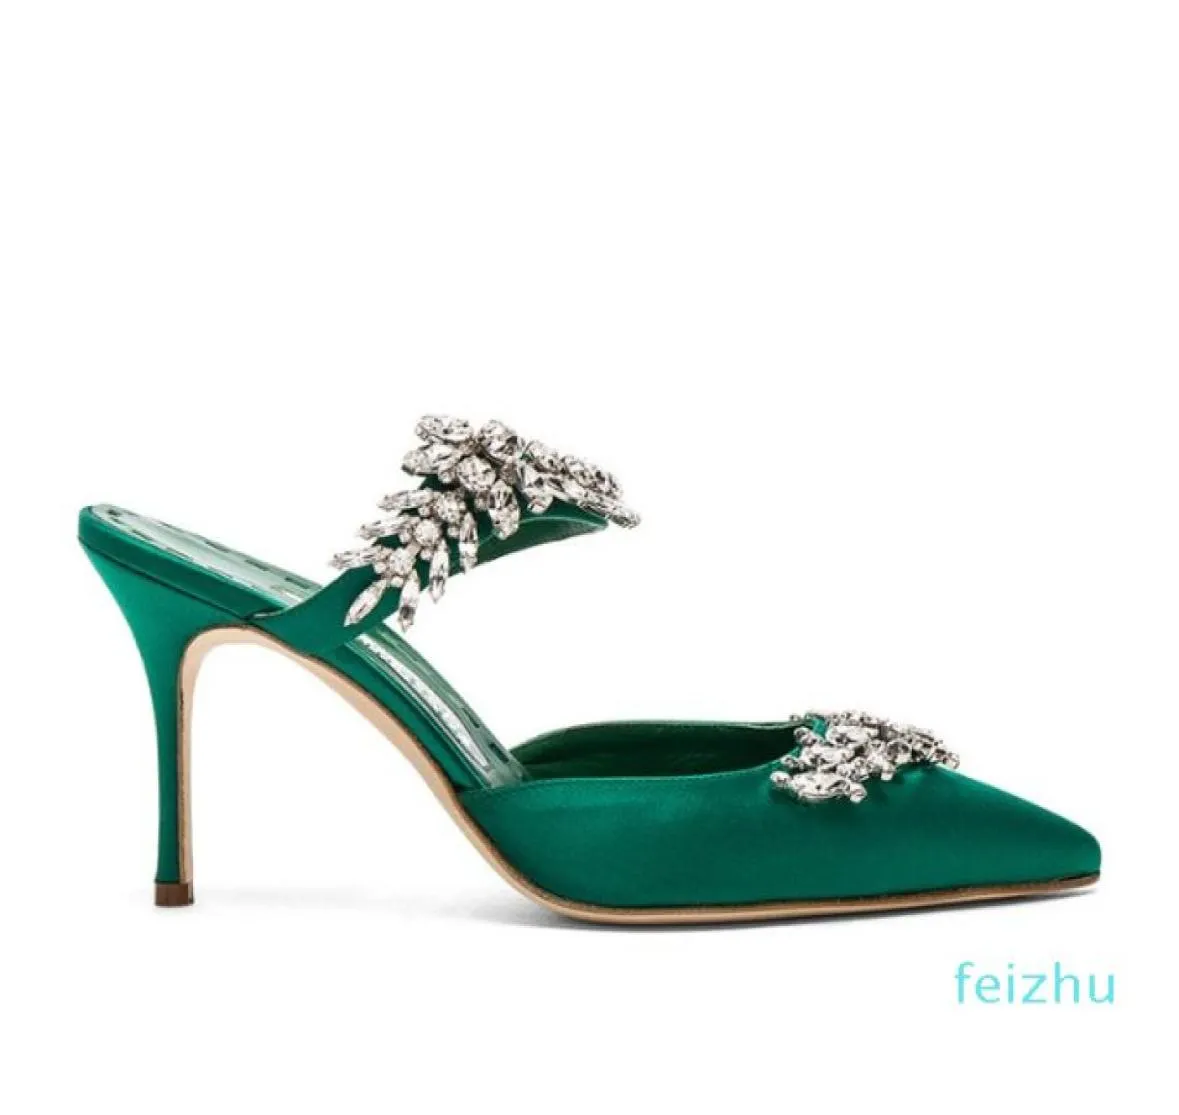 Shoes Fashion Pumps Lurum Green Satin Crystal Embellished Mules Wedding Party 90mm Heel Jewel Leaf6274442